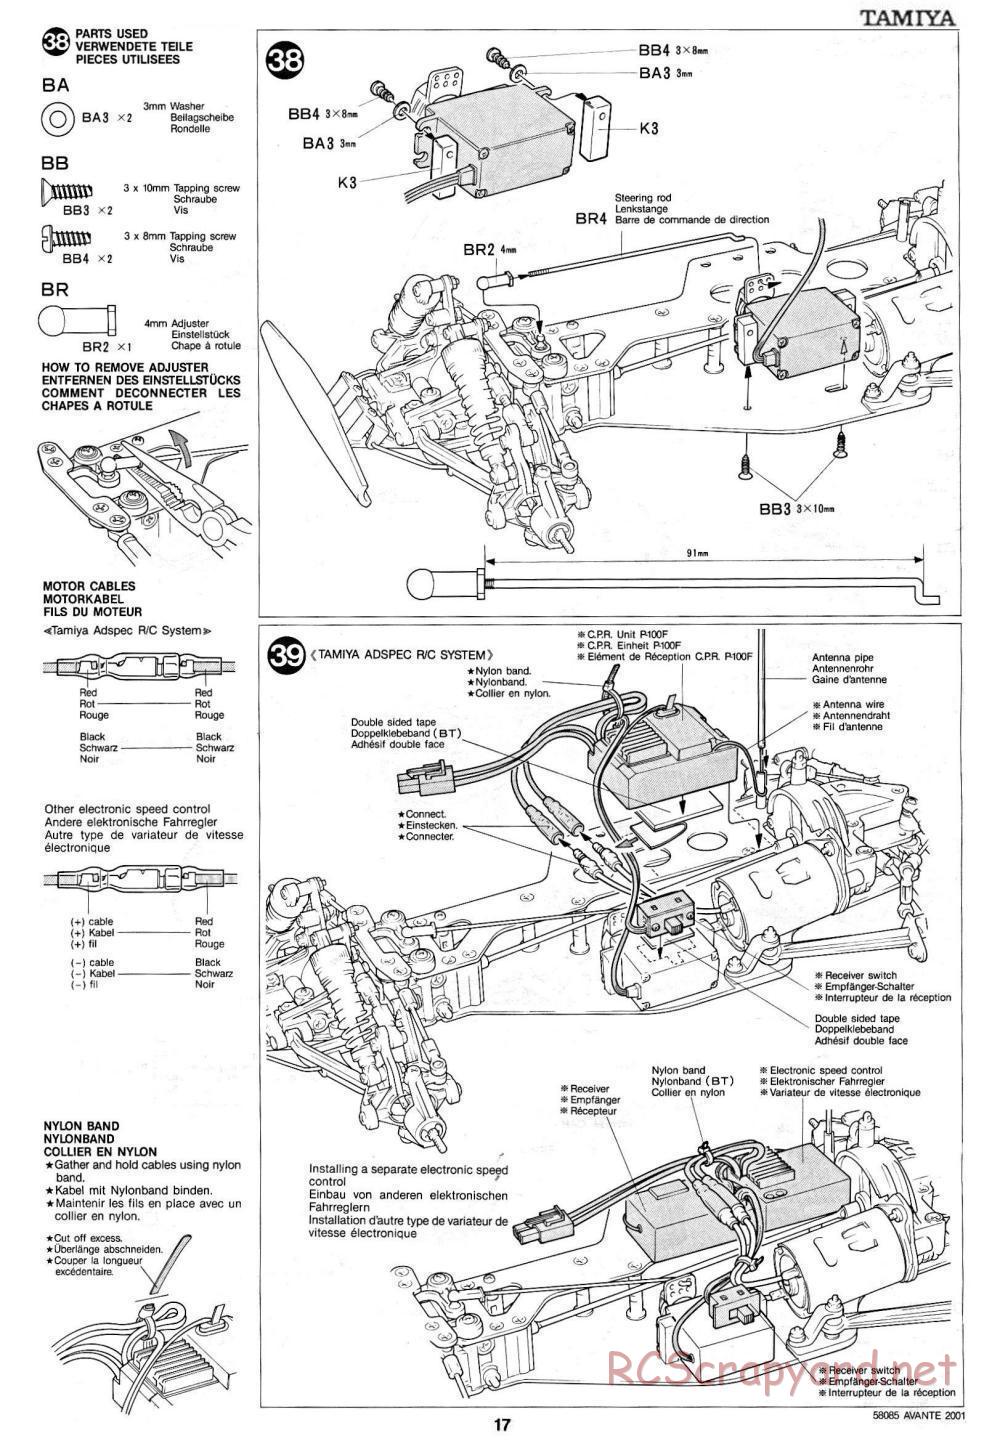 Tamiya - Avante 2001 - 58085 - Manual - Page 17